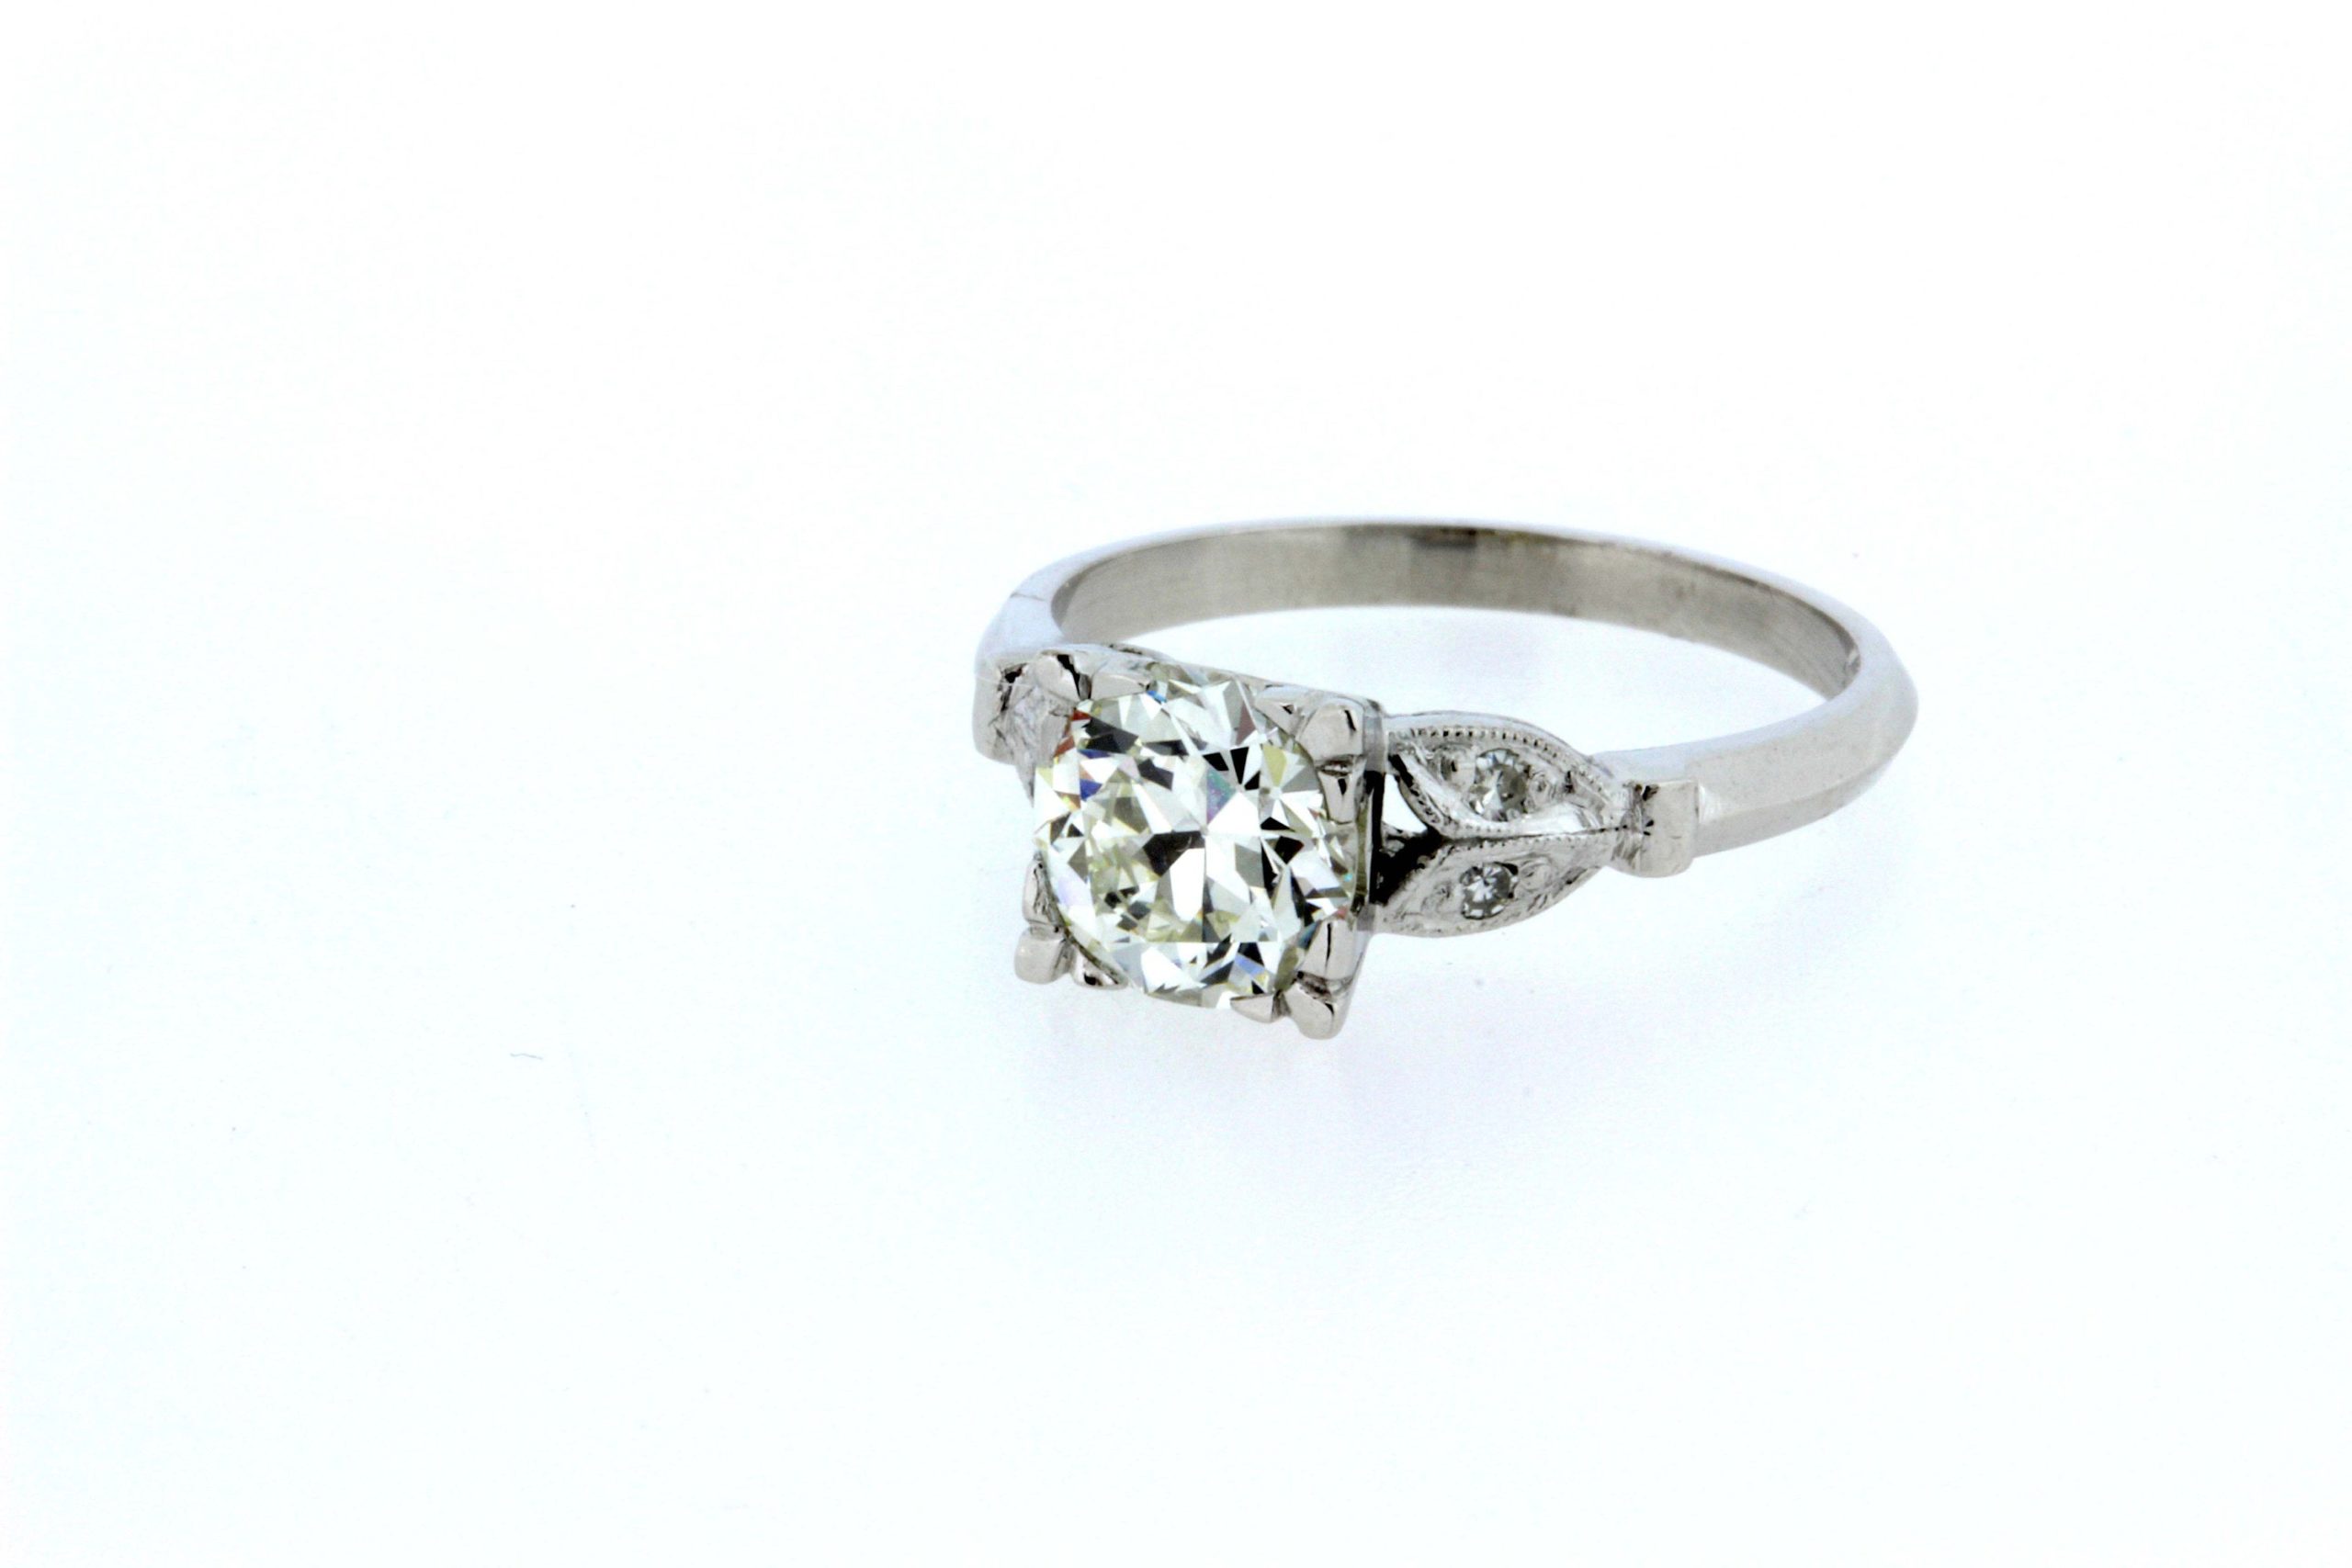 Vintage 1930's 14k Yellow Gold & Diamond Engagement Ring